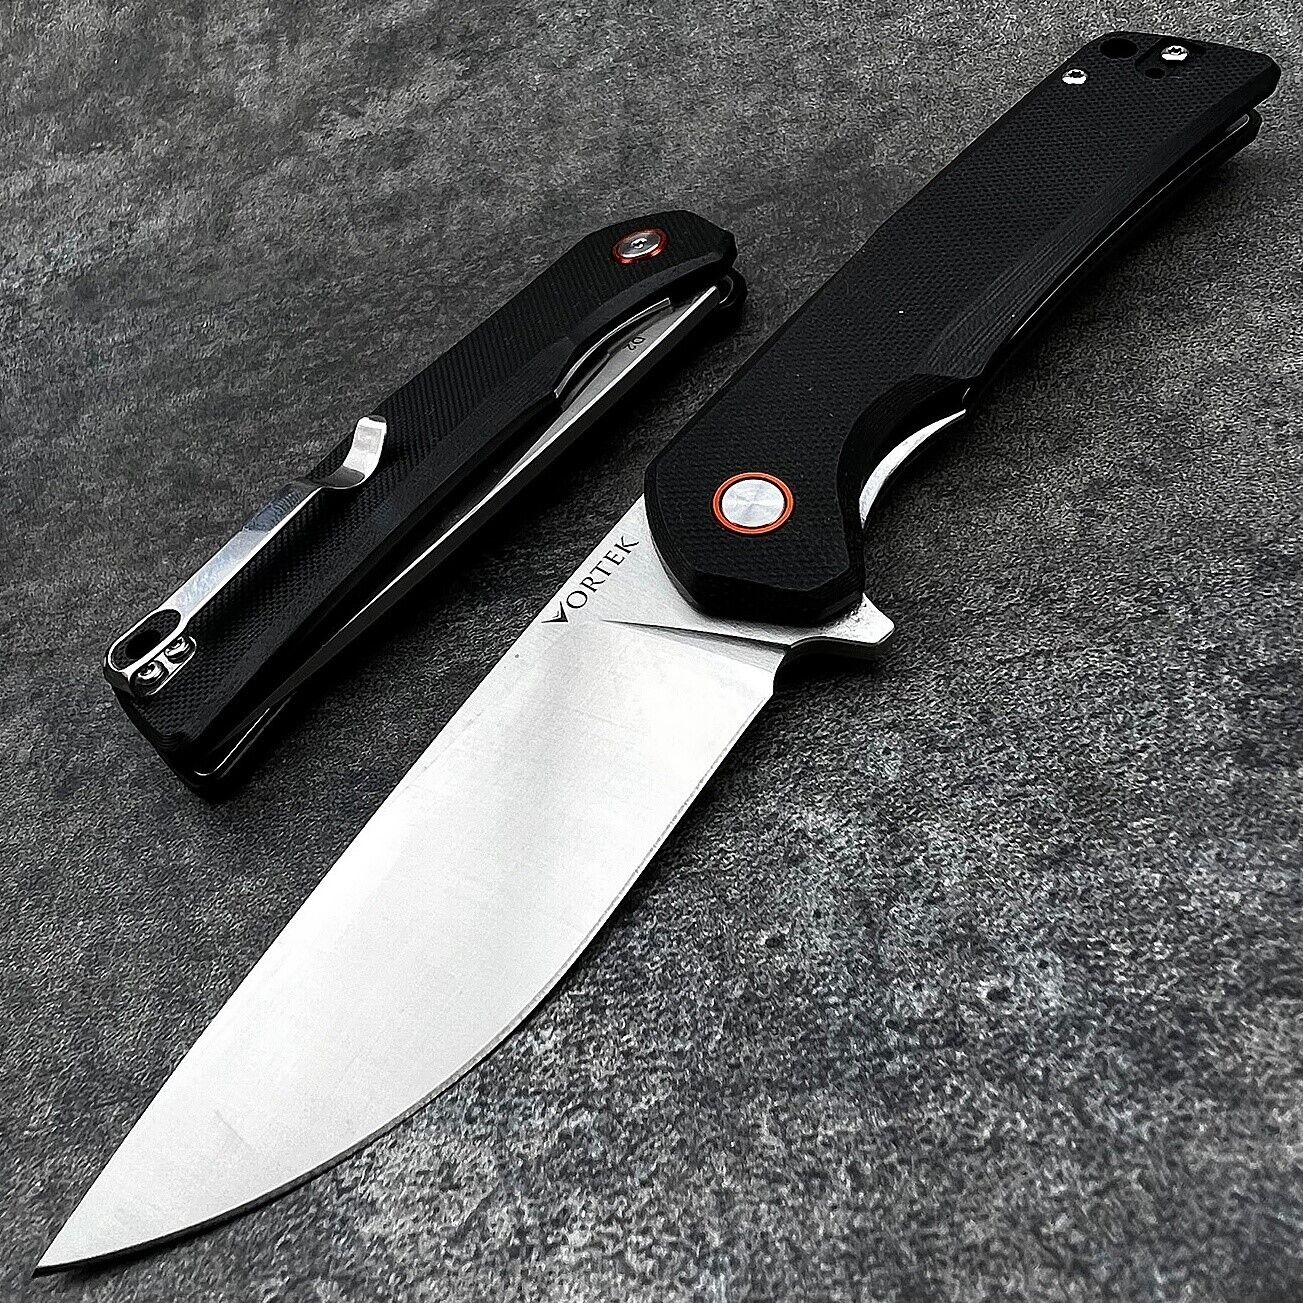 VORTEK RIPTIDE Black G10 Tactical EDC Ball Bearing D2 Blade Folding Pocket Knife